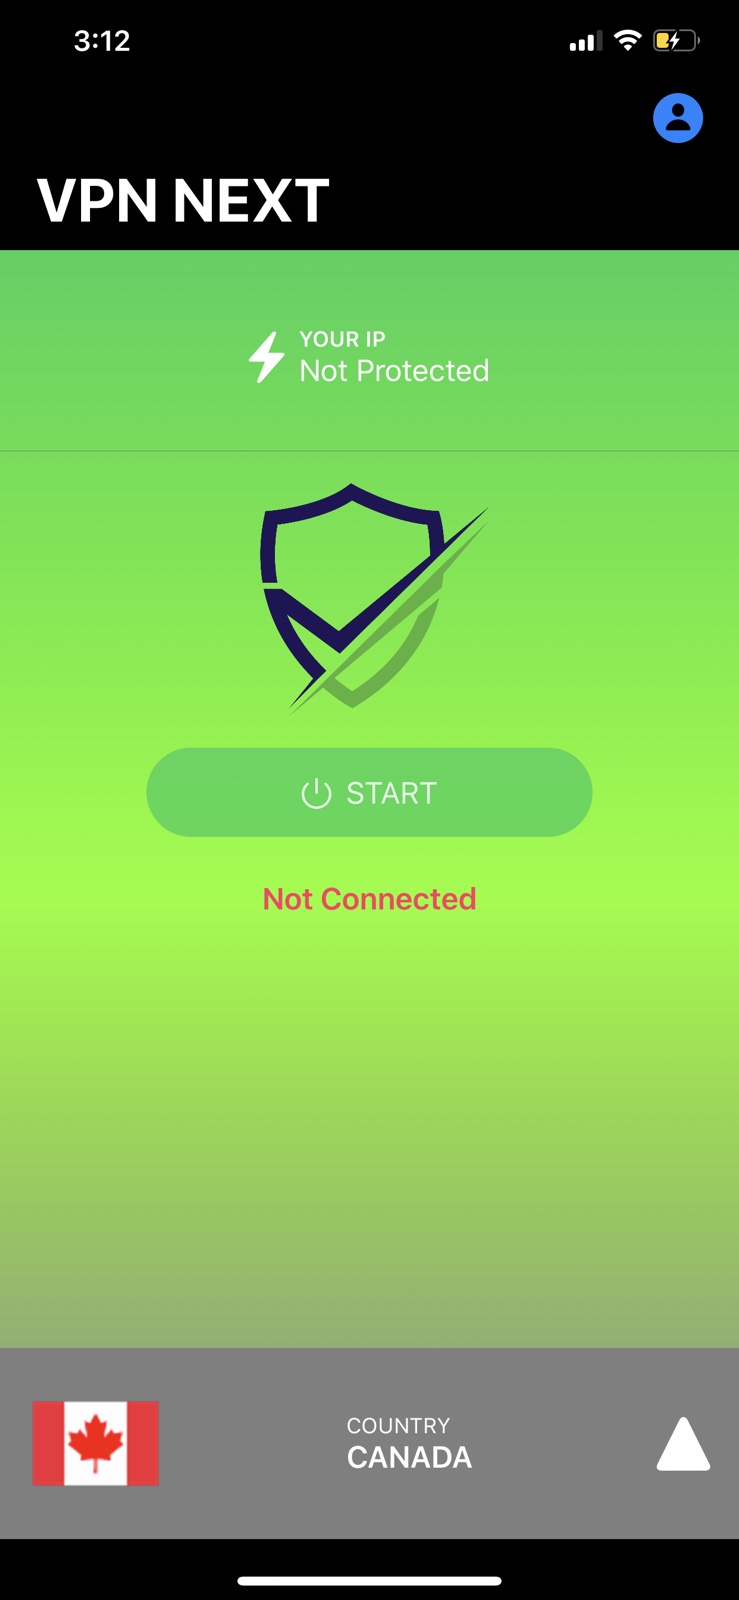 VpnNext app UI (iOS): VPN connected.